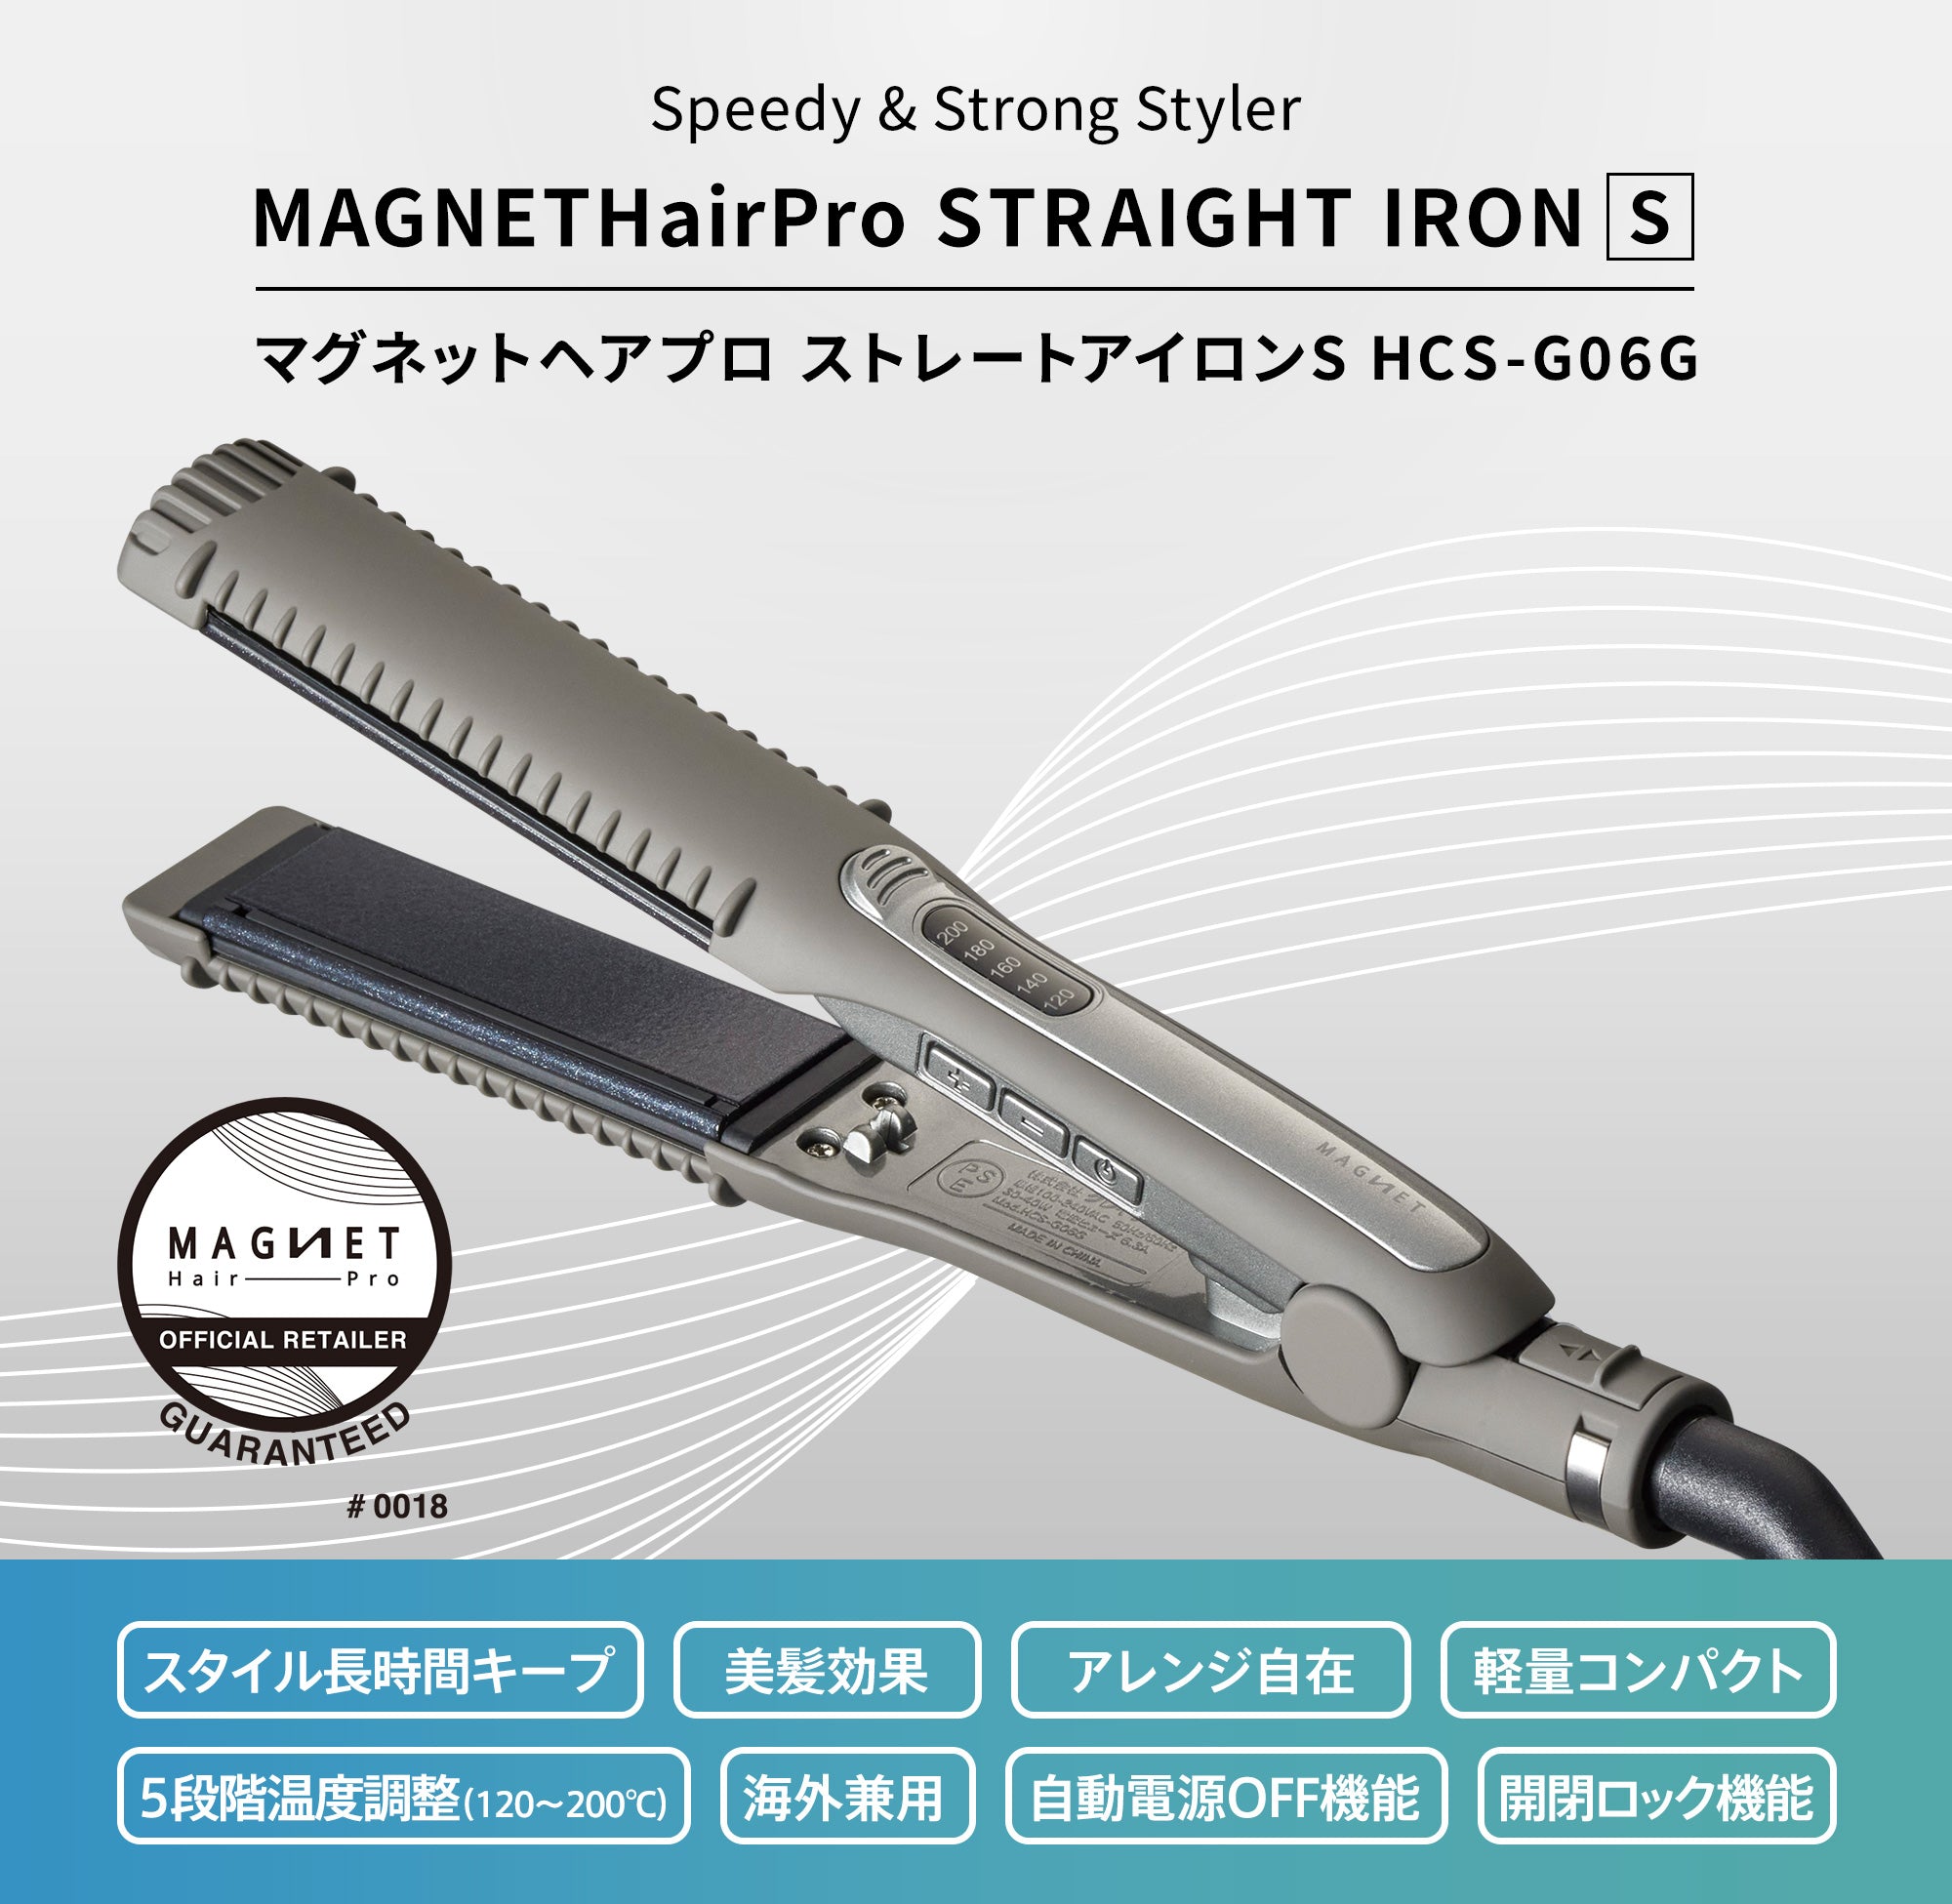 MAGNETHairPro STRAIGHT IRON S スタイル長時間キープ 美髪効果 アレンジ自在 軽量コンパクト 5段階温度調整（120〜200℃） 海外兼用 自動電源OFF機能